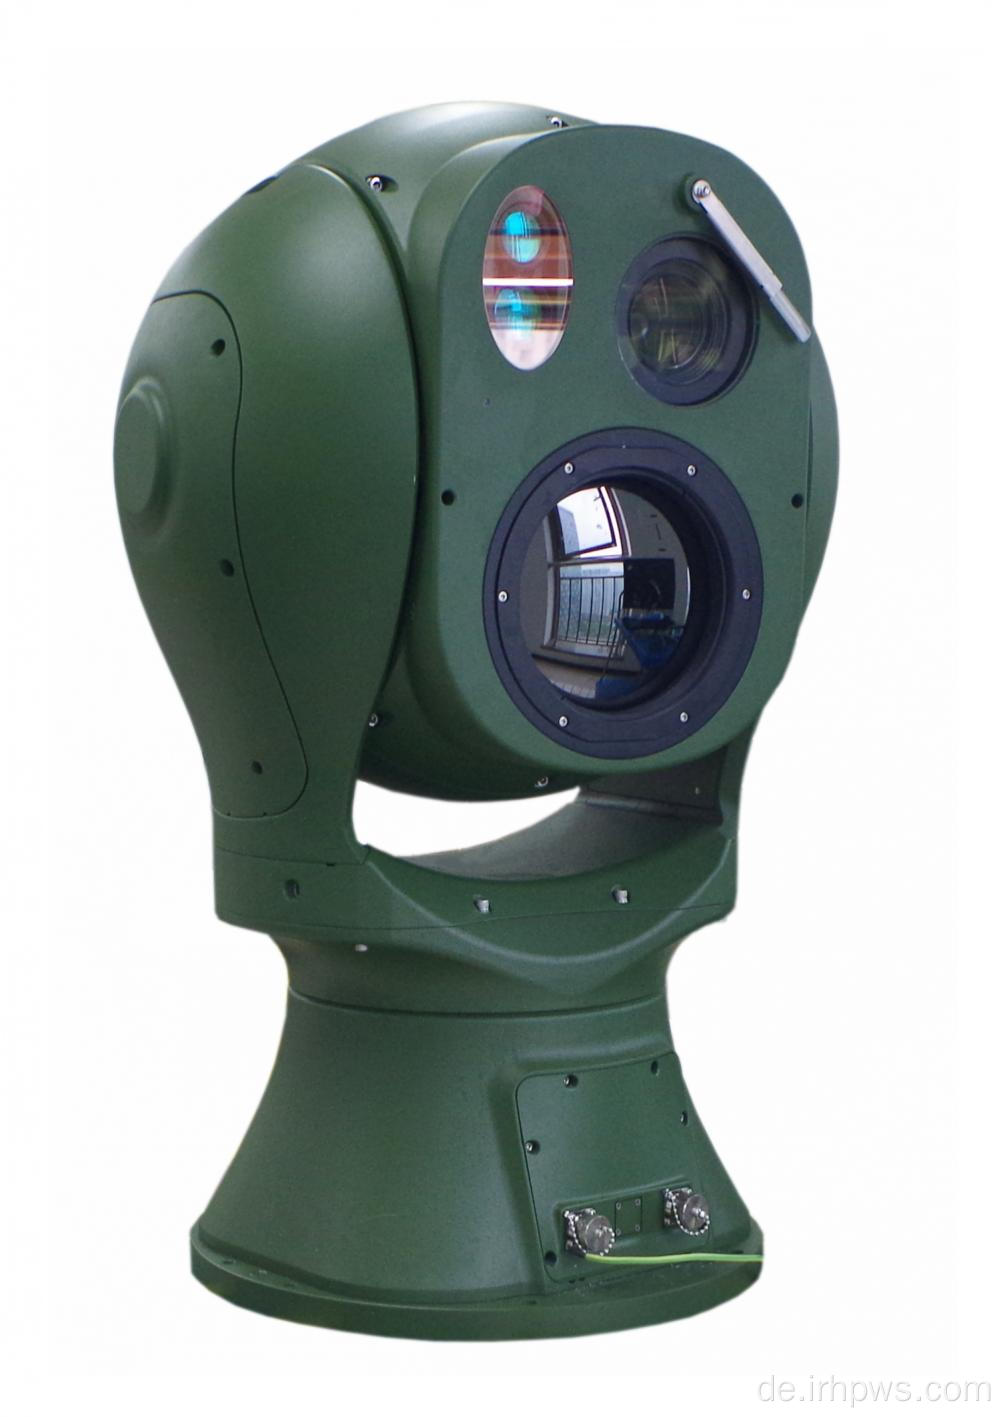 2000 -mm -CCTV -Kamera Wärme Bildgebungsweite Langstrecke